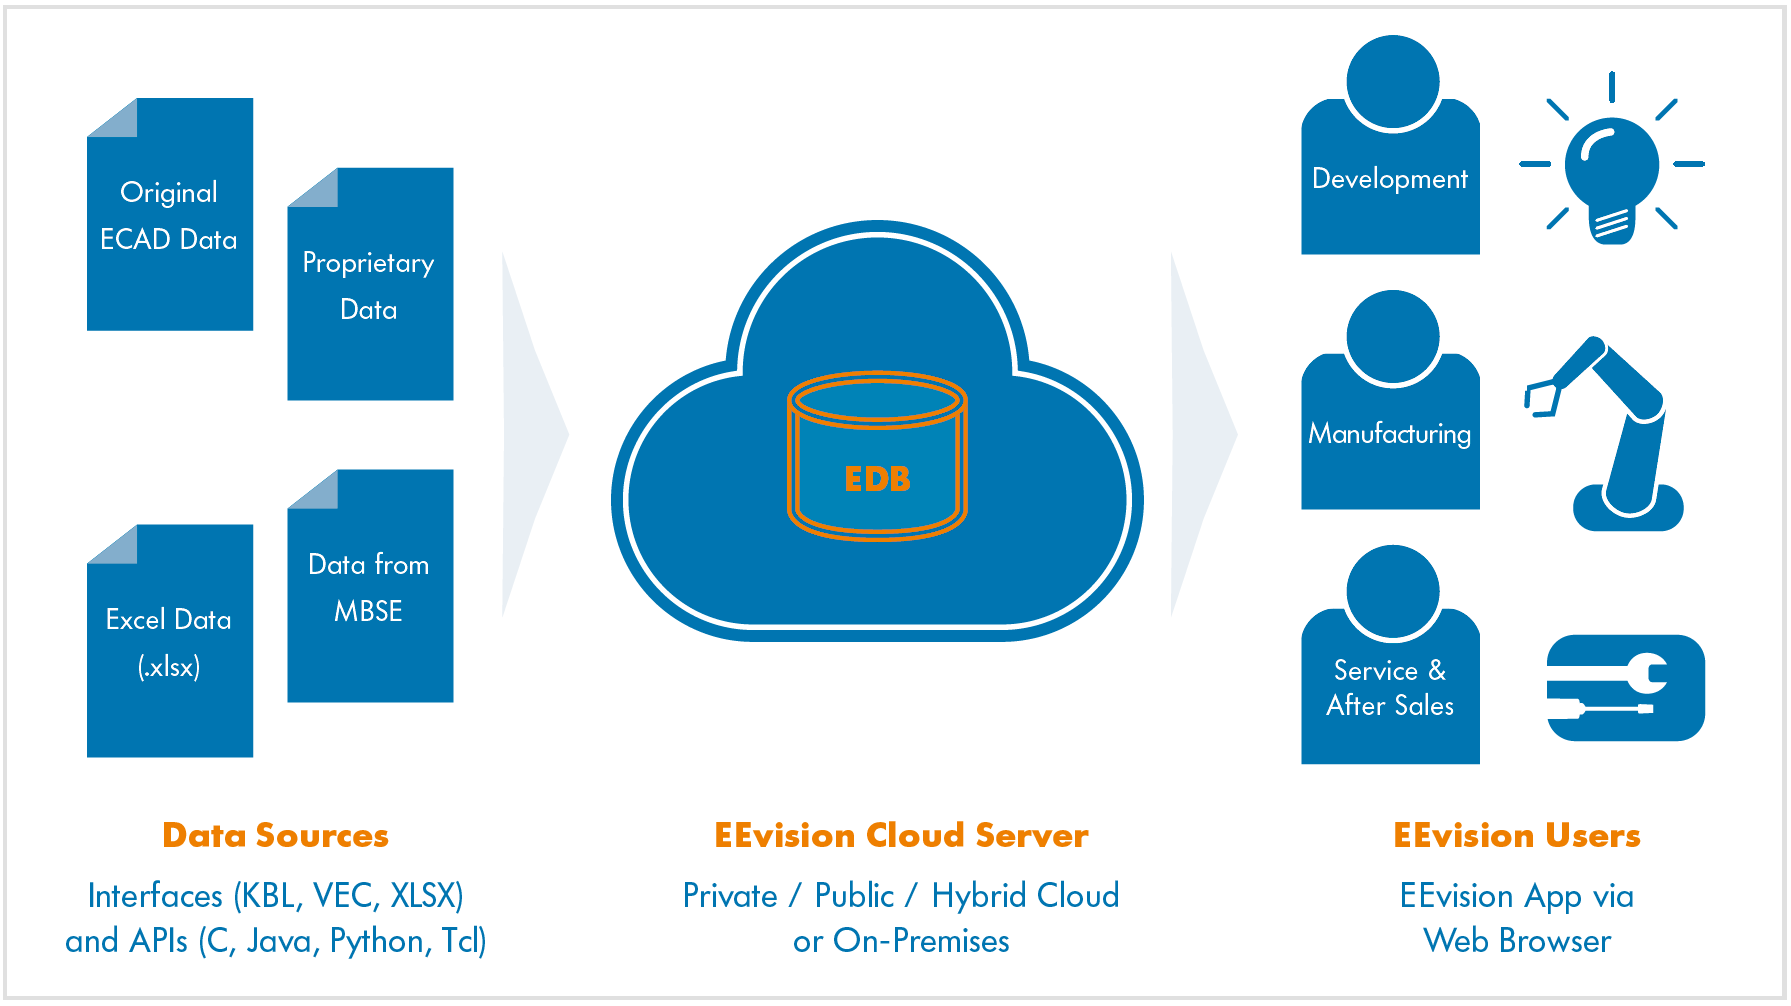 EEvision Cloud Server